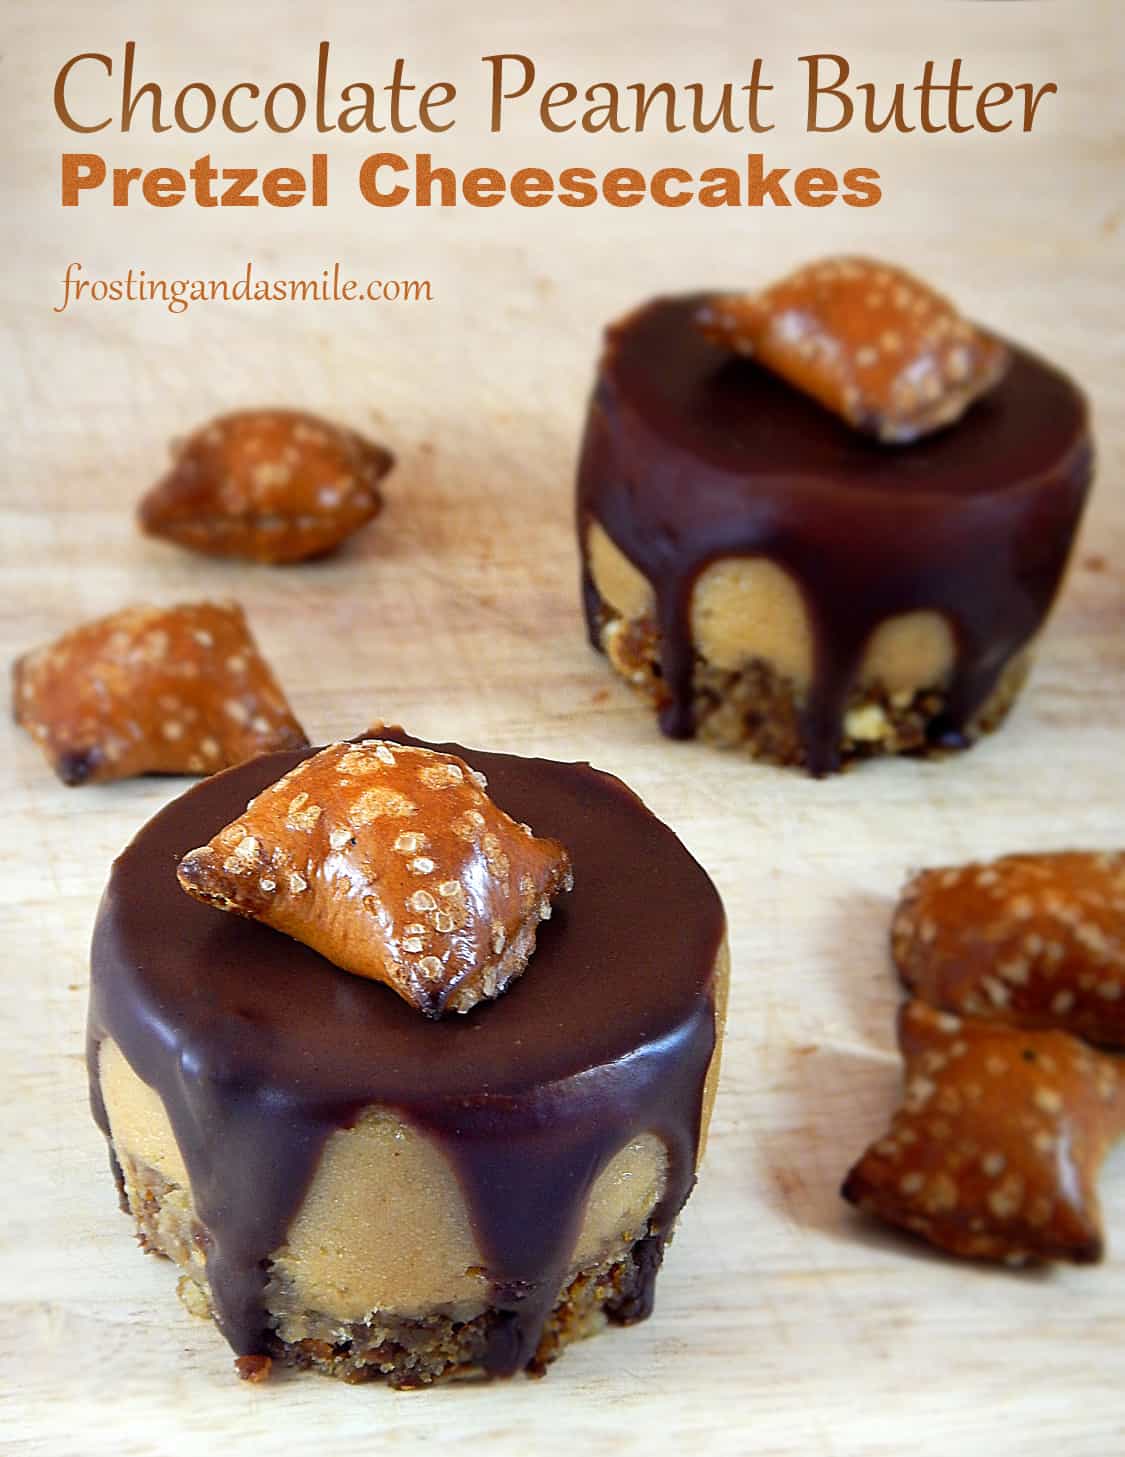 Chocolate-Peanut-Butter-Preztel-Cheesecakes-Labeled.jpg